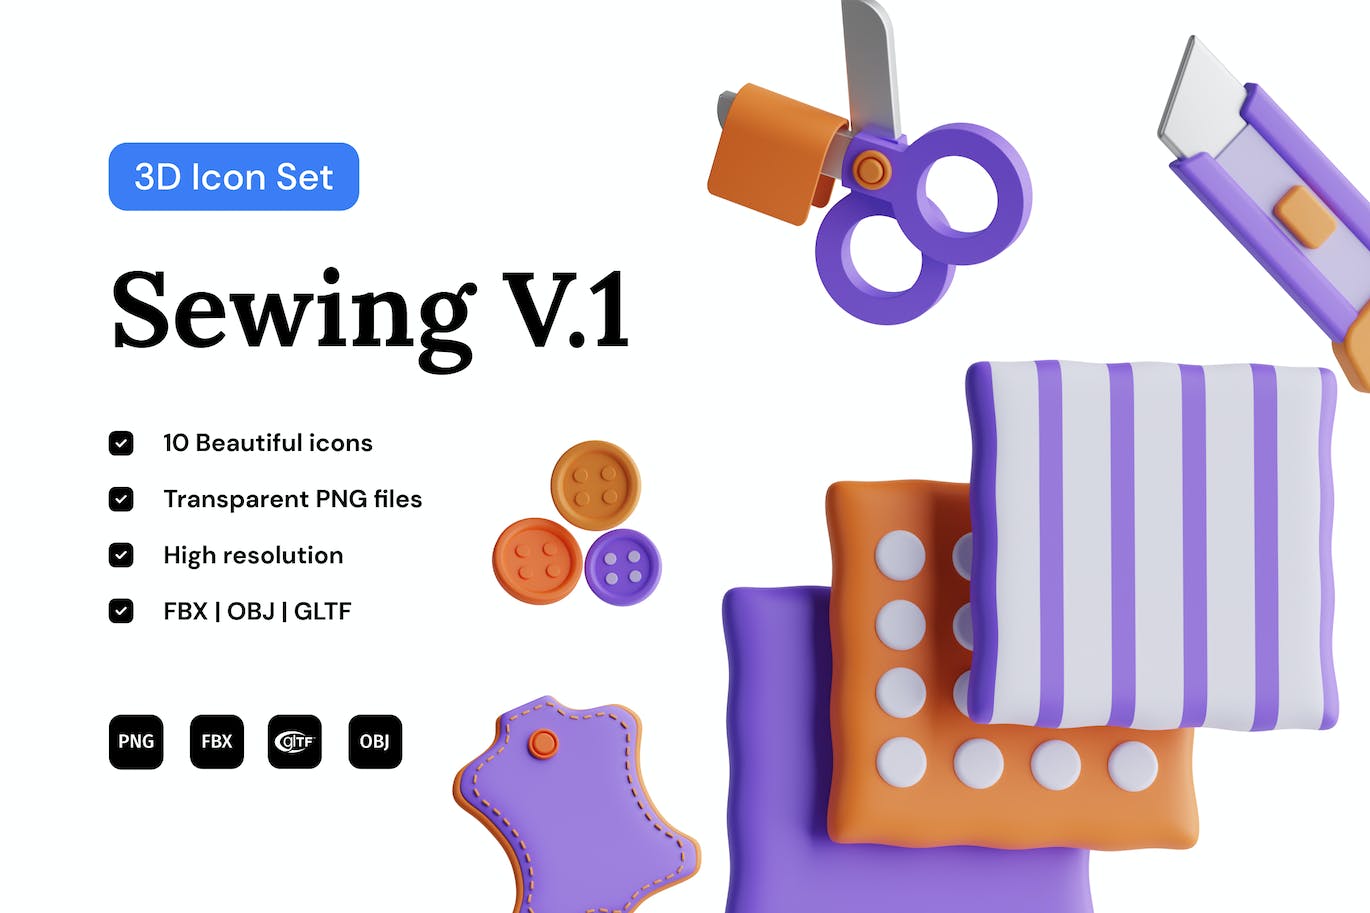 3D缝纫工具图标插画模型素材合集v1 3D Sewing V.1